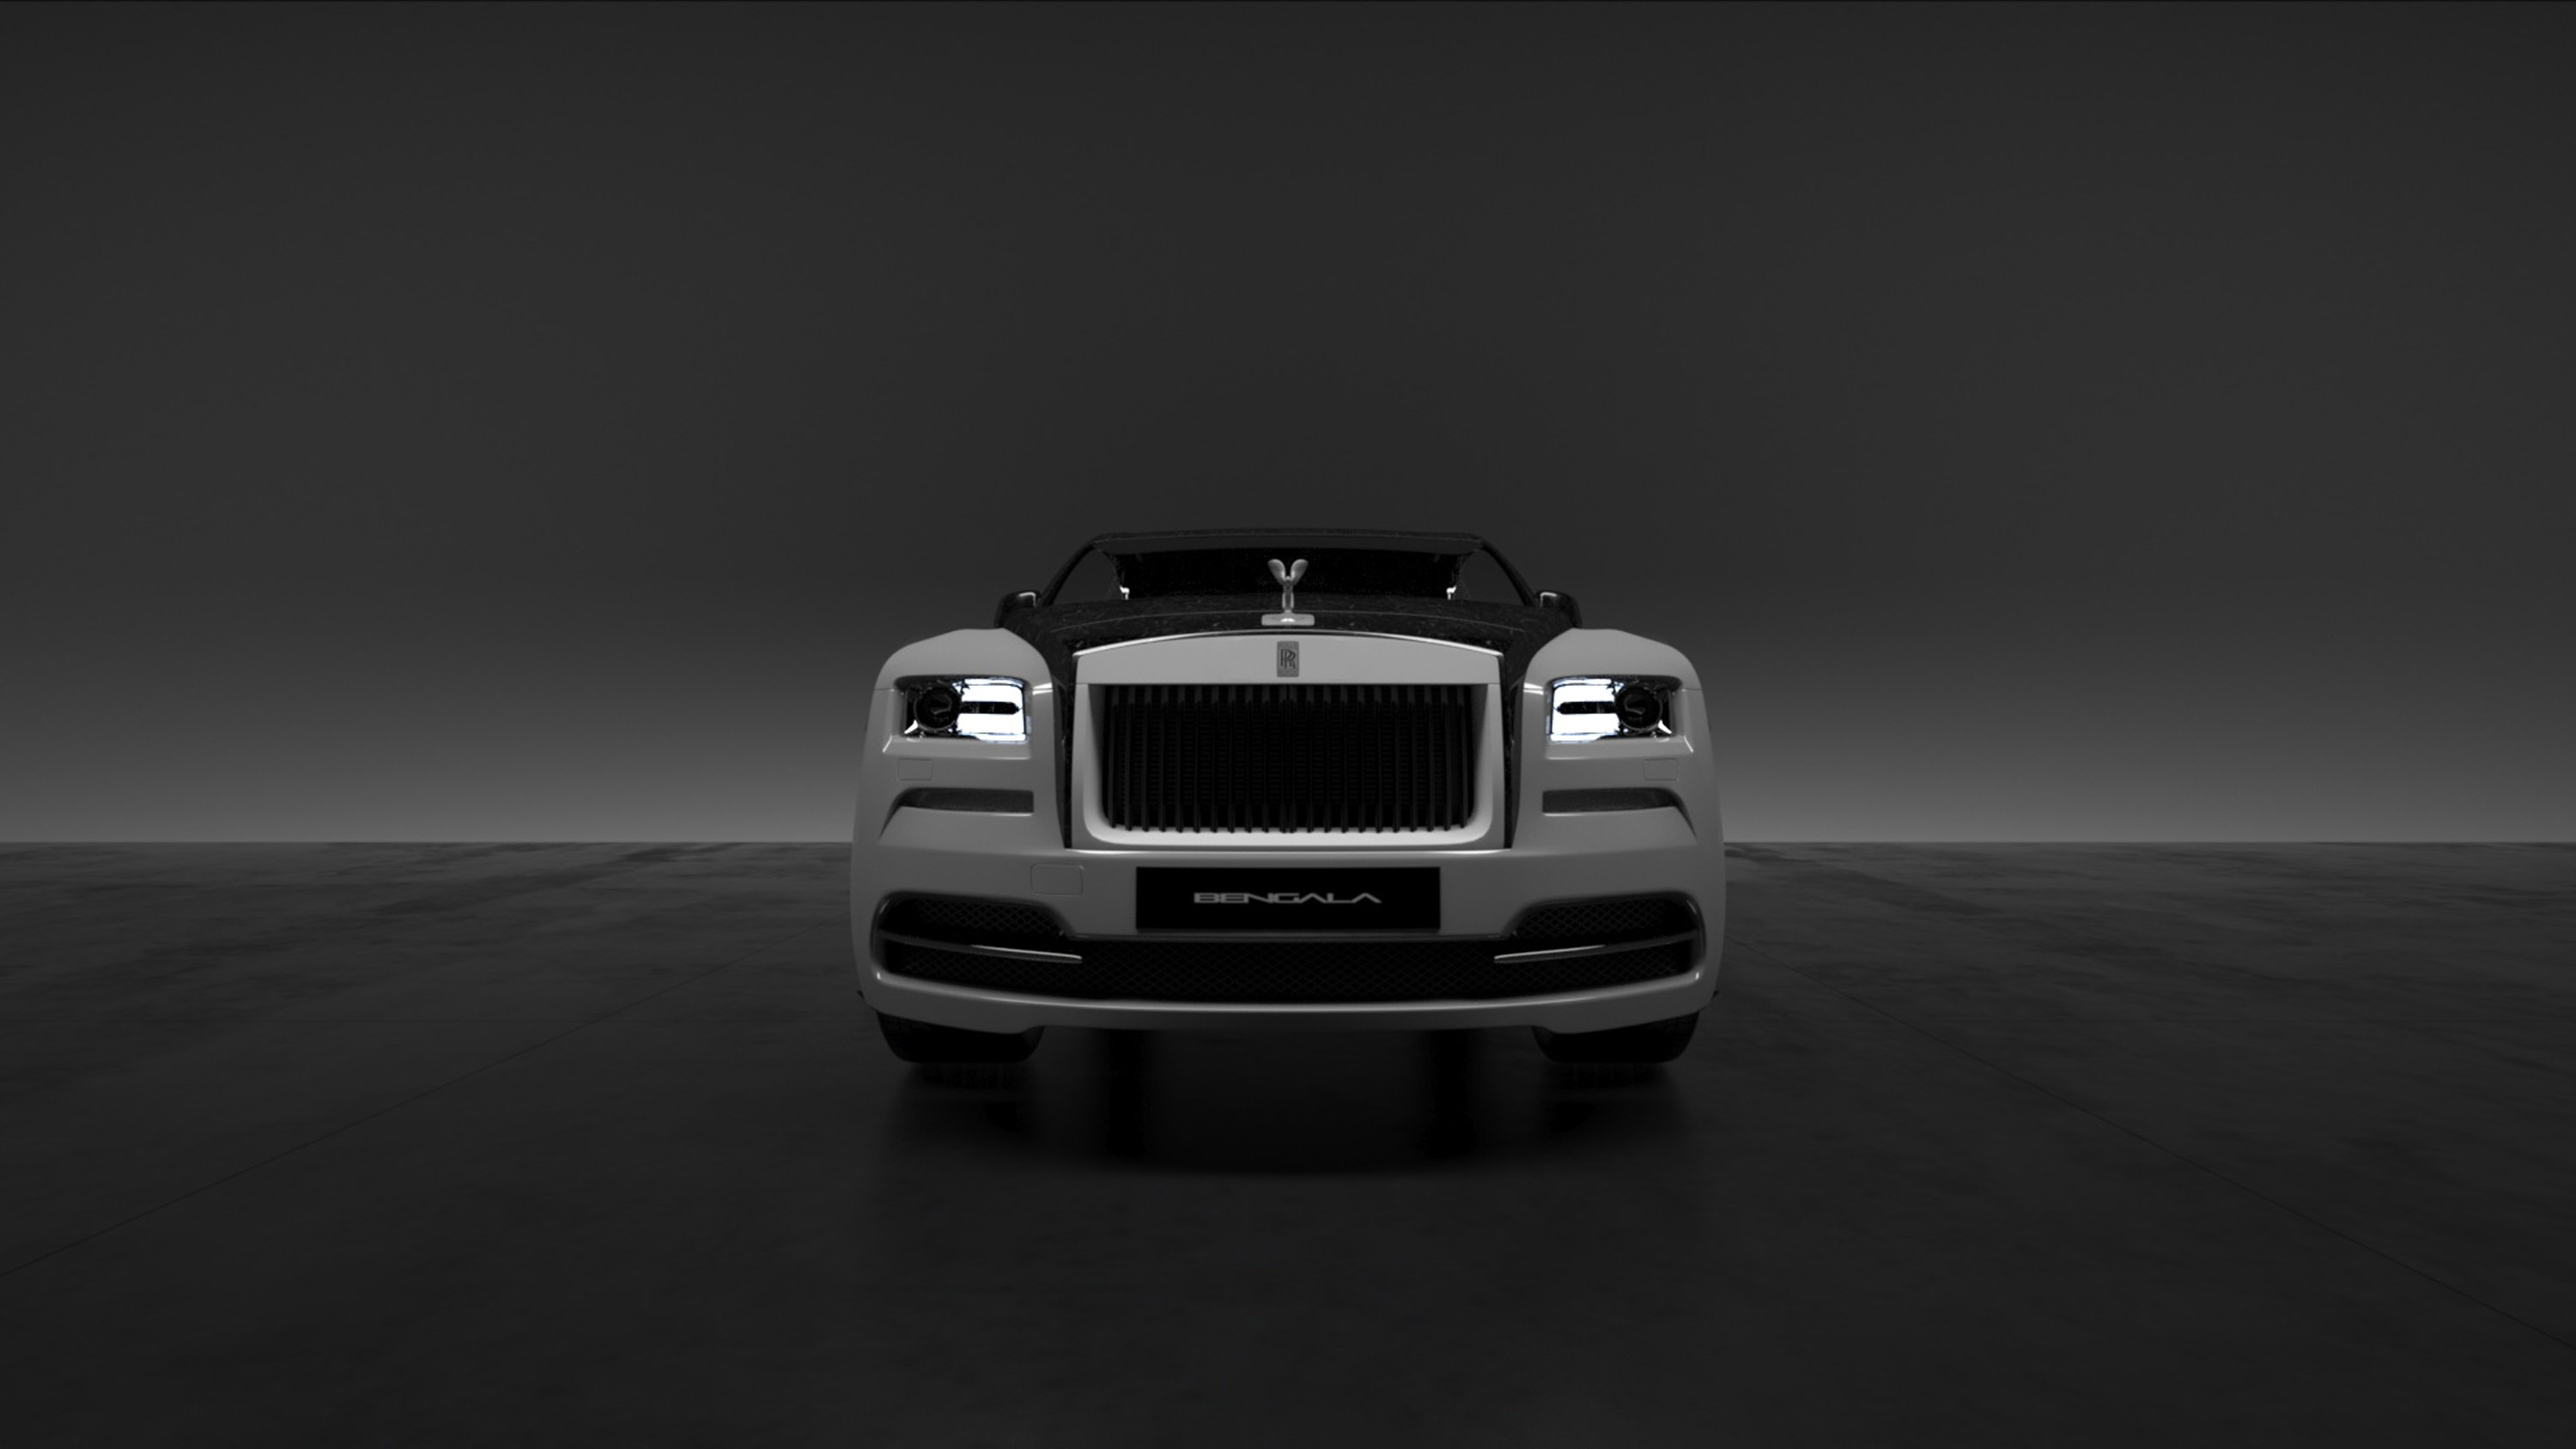 Rolls-Royce Bengala Automotive and Vitesse Audessus Project